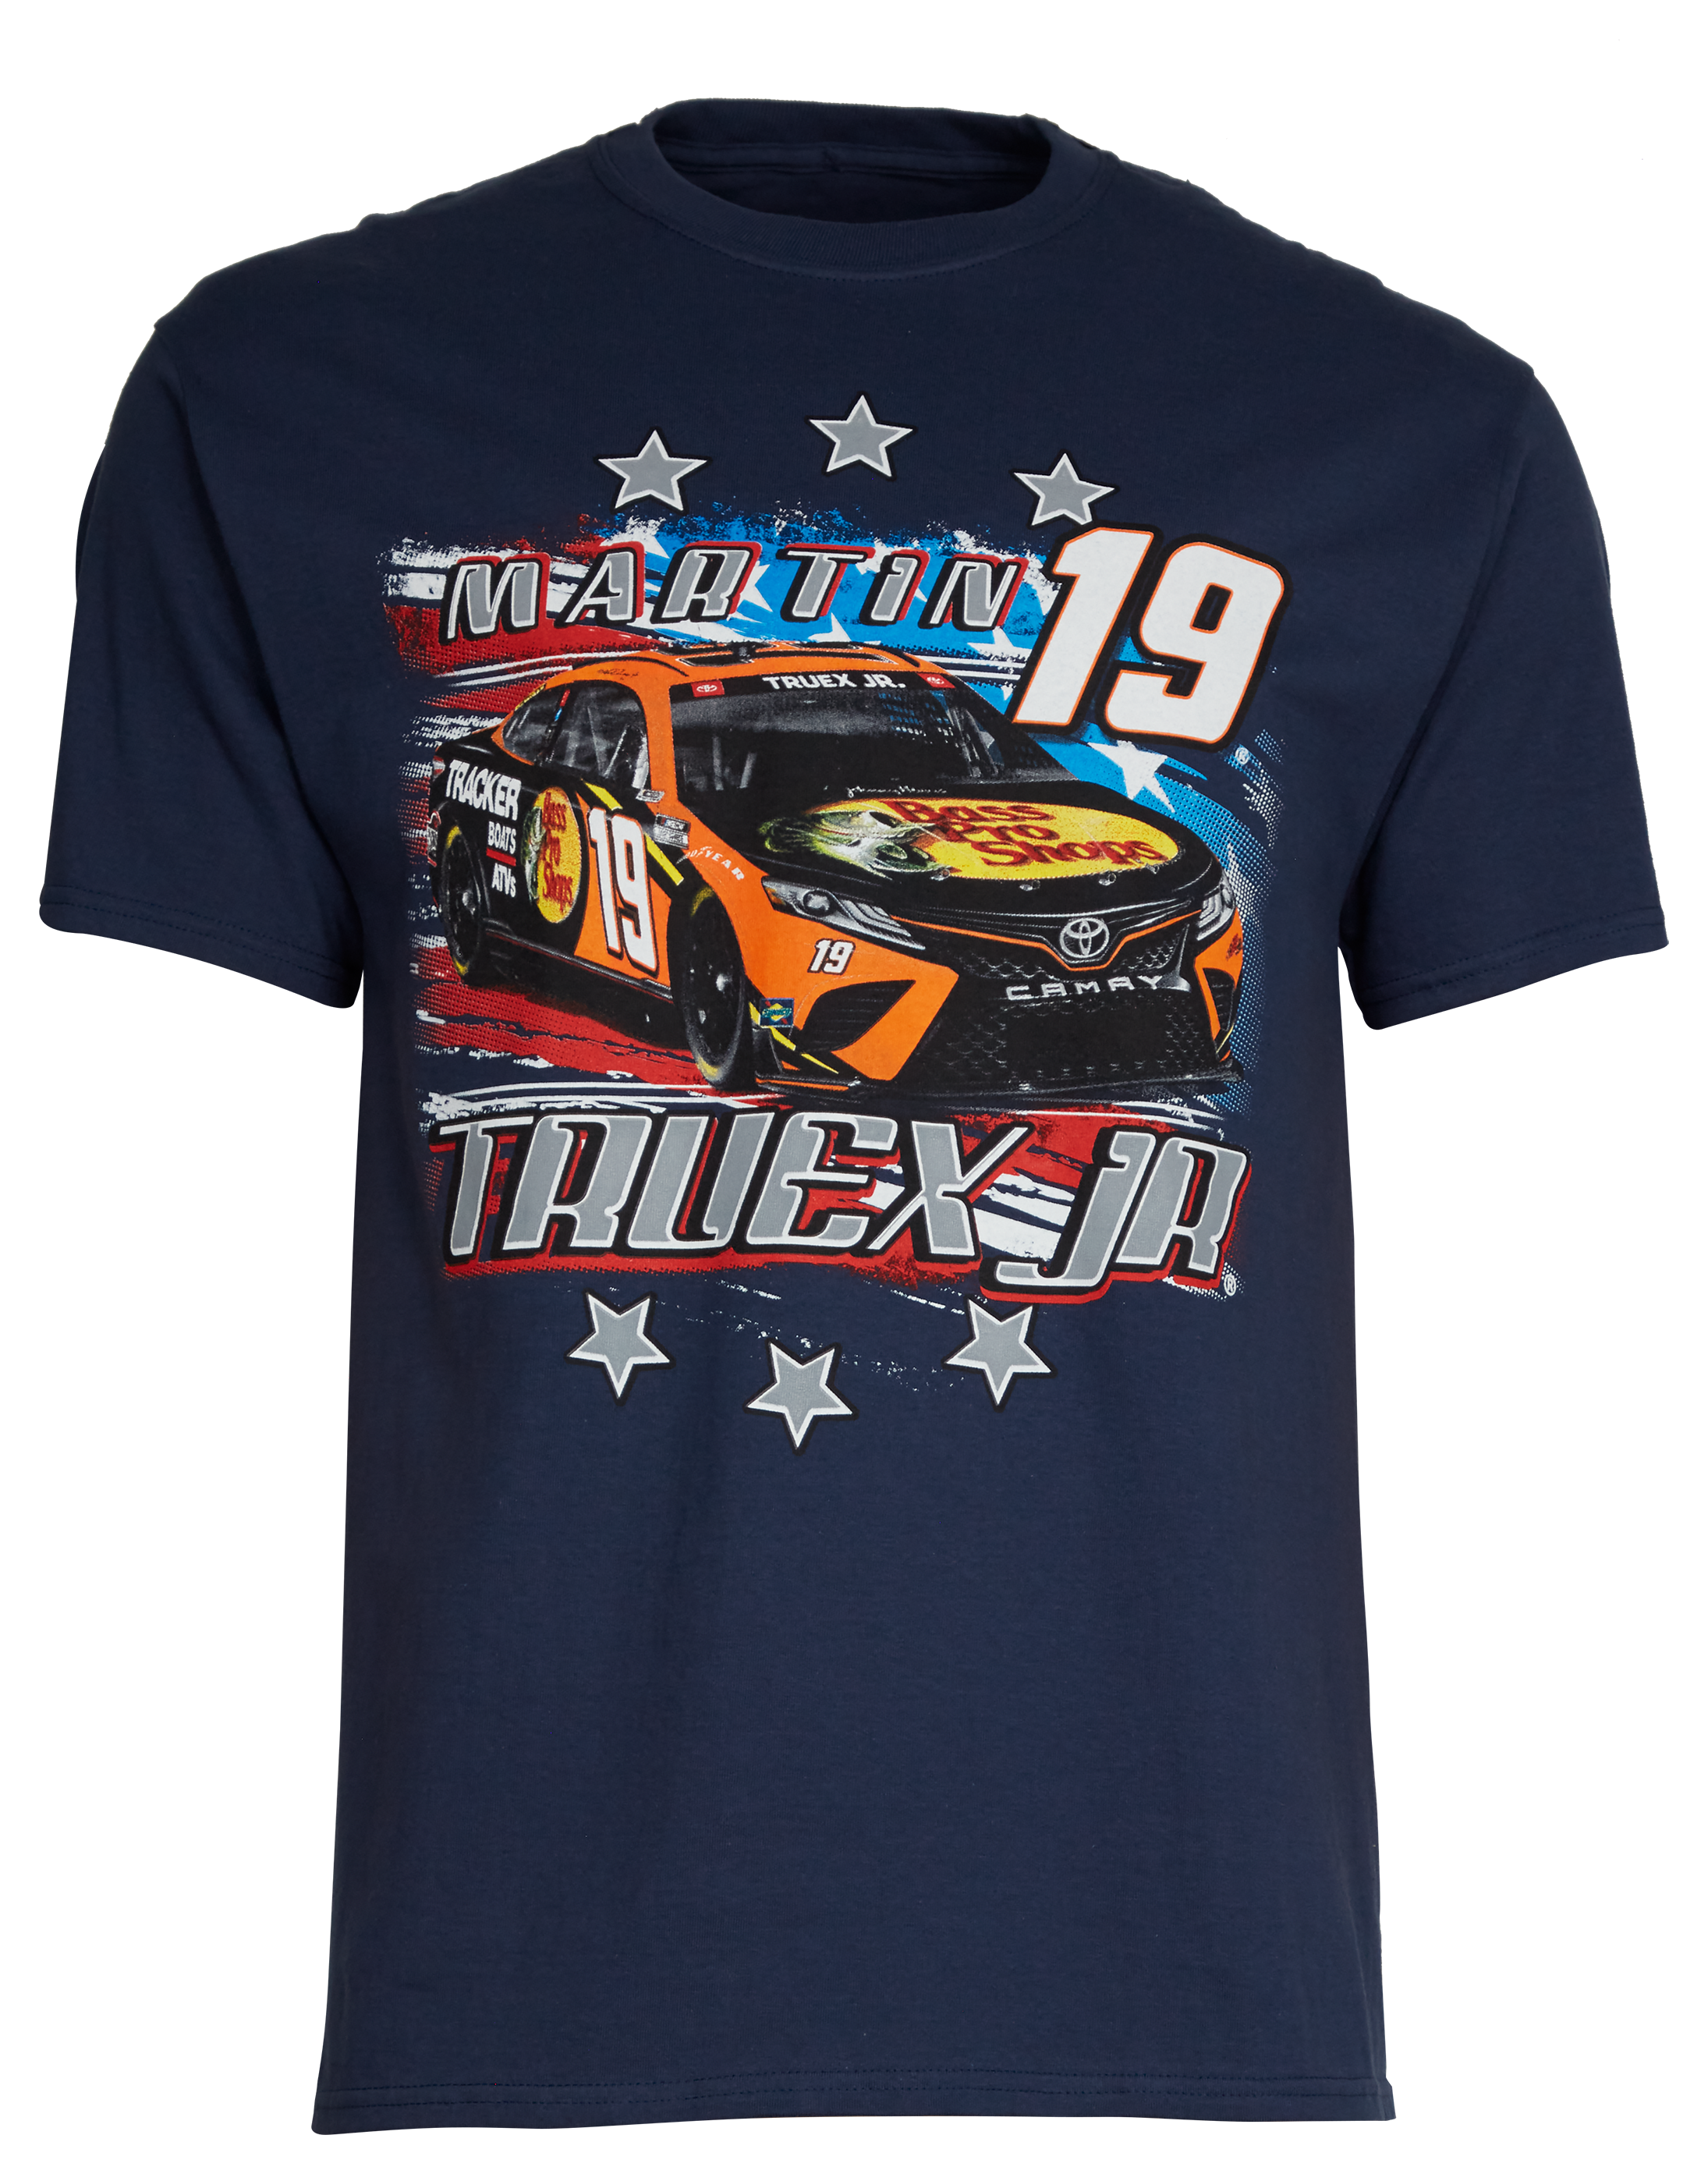 Bass Pro Shops NASCAR Martin Truex Jr. 19 Stars and Stripes Short-Sleeve T-Shirt for Men - Navy - 2XL